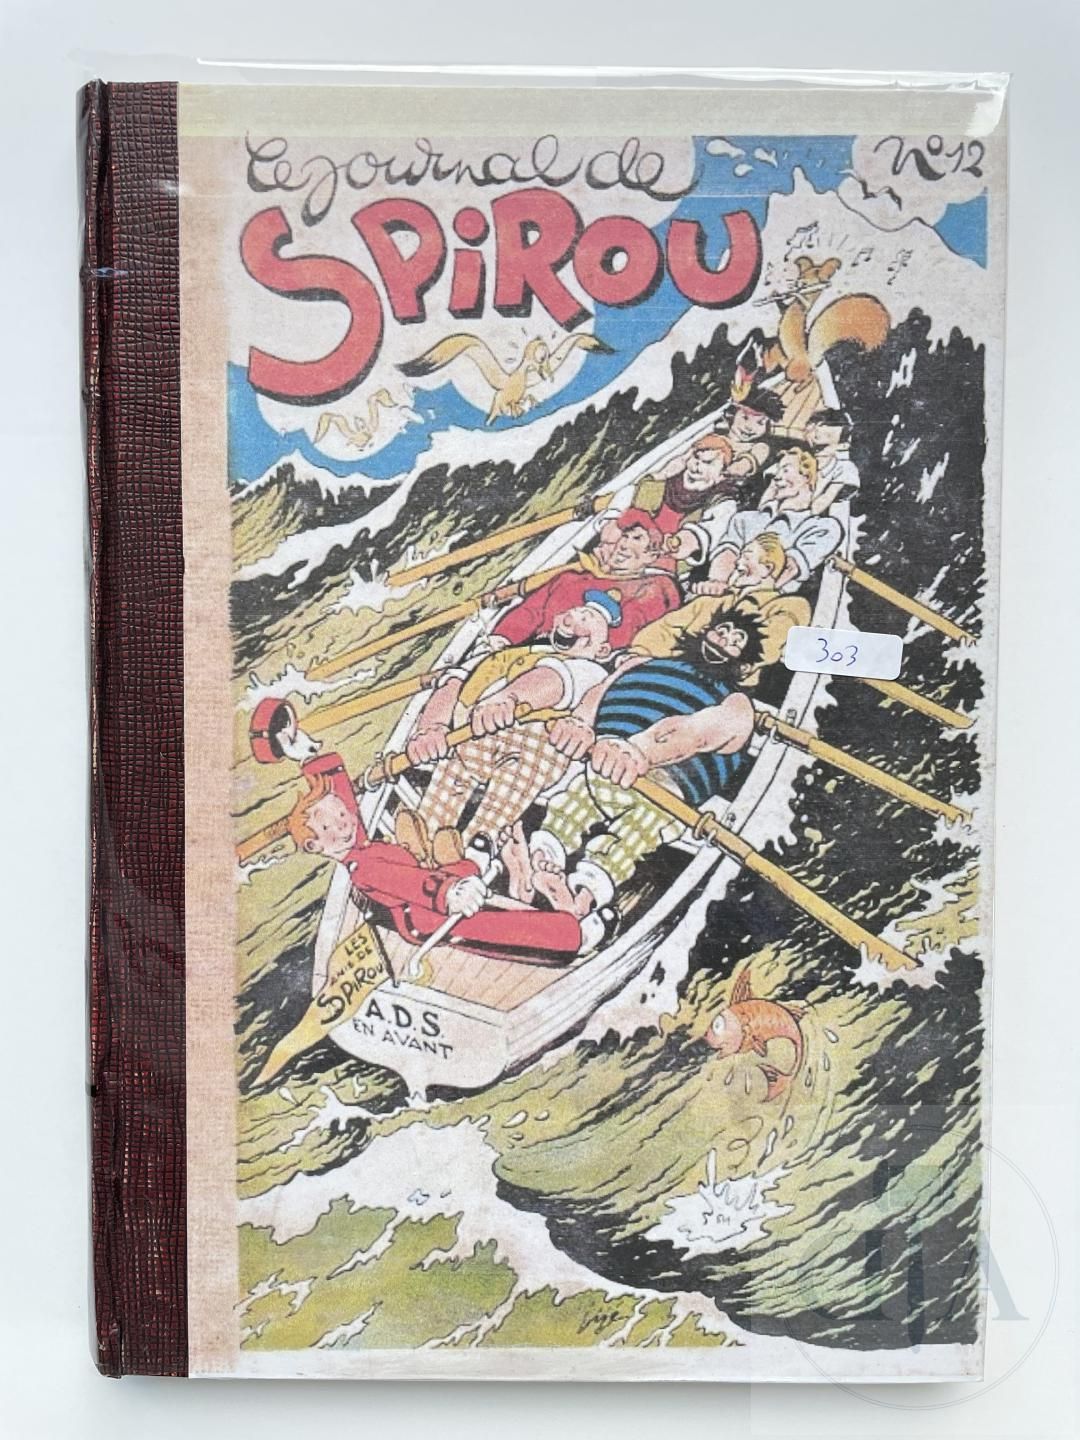 Null Le journal de Spirou/Reliure editeur n°12 de 1942. Completo en buen estado.&hellip;